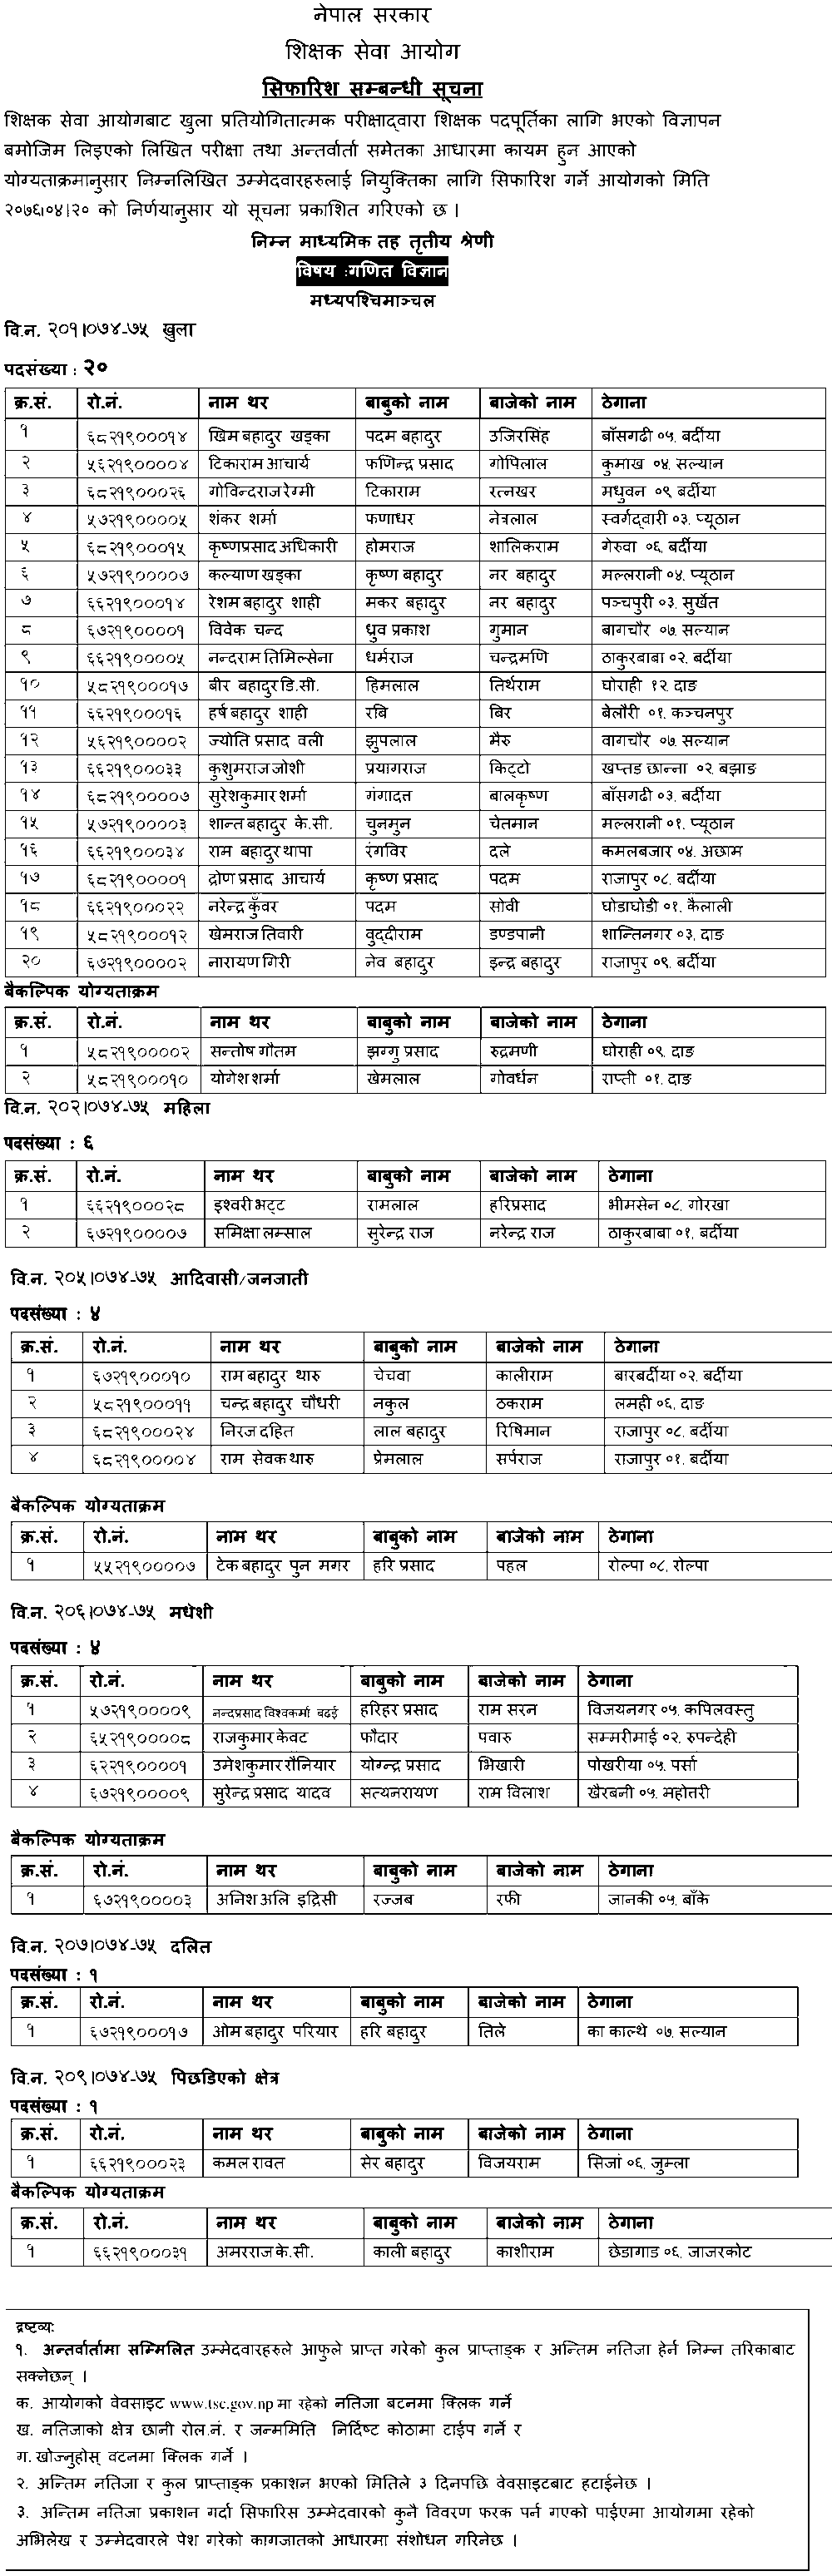 Basic Level Mathematics and Science Result of Madhyapaschim Region - TSC